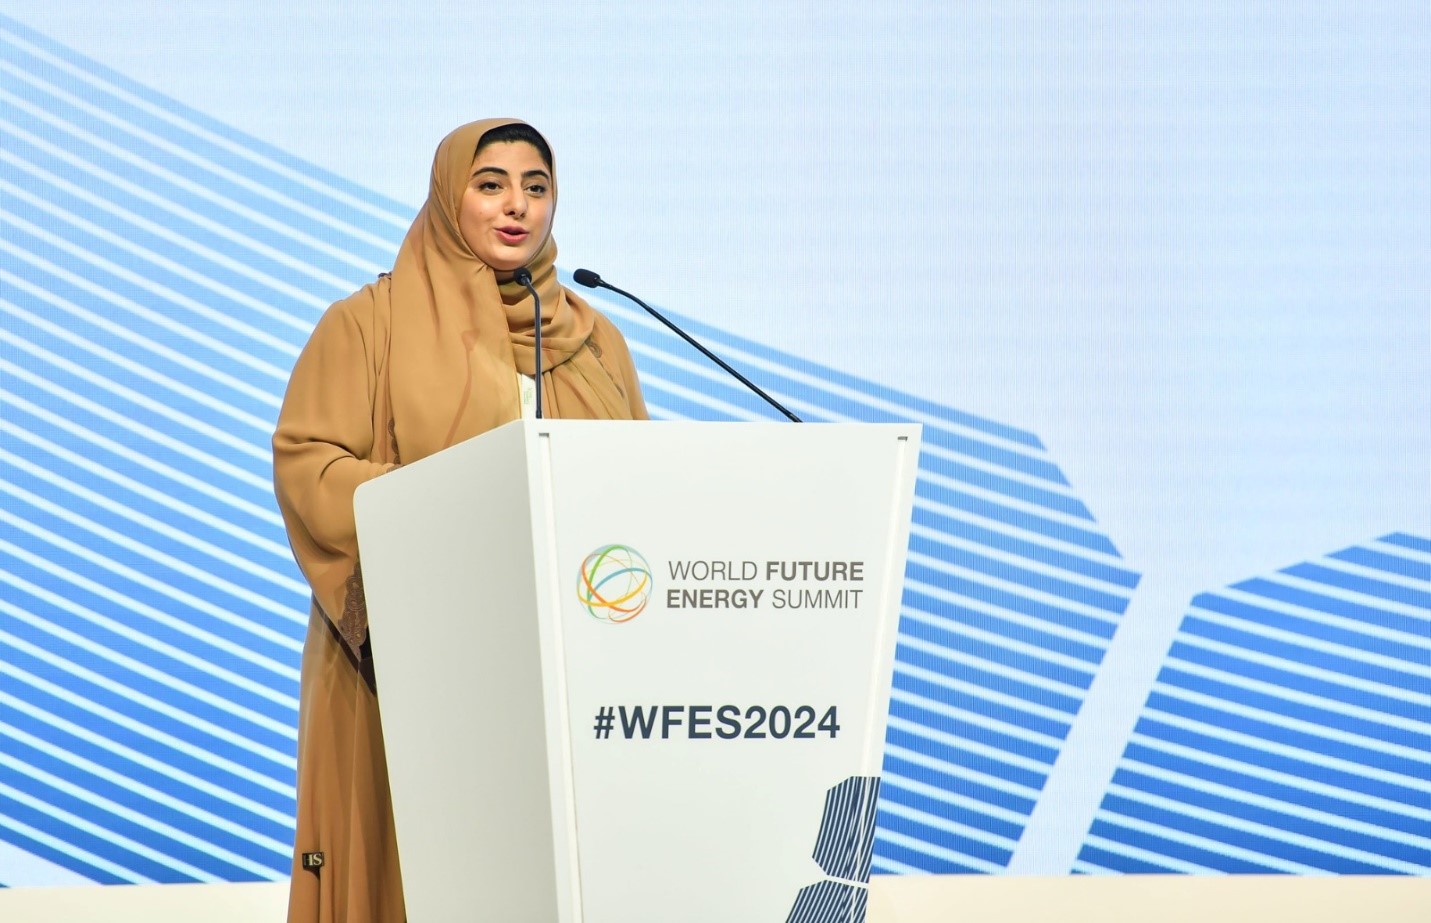 Her Highness Sheika Shamma bint Sultan bin Khalifa Al Nahyan delivers her opening address at the World Future Energy Summit in Abu Dhabi. (Photo: IRENA 2024)